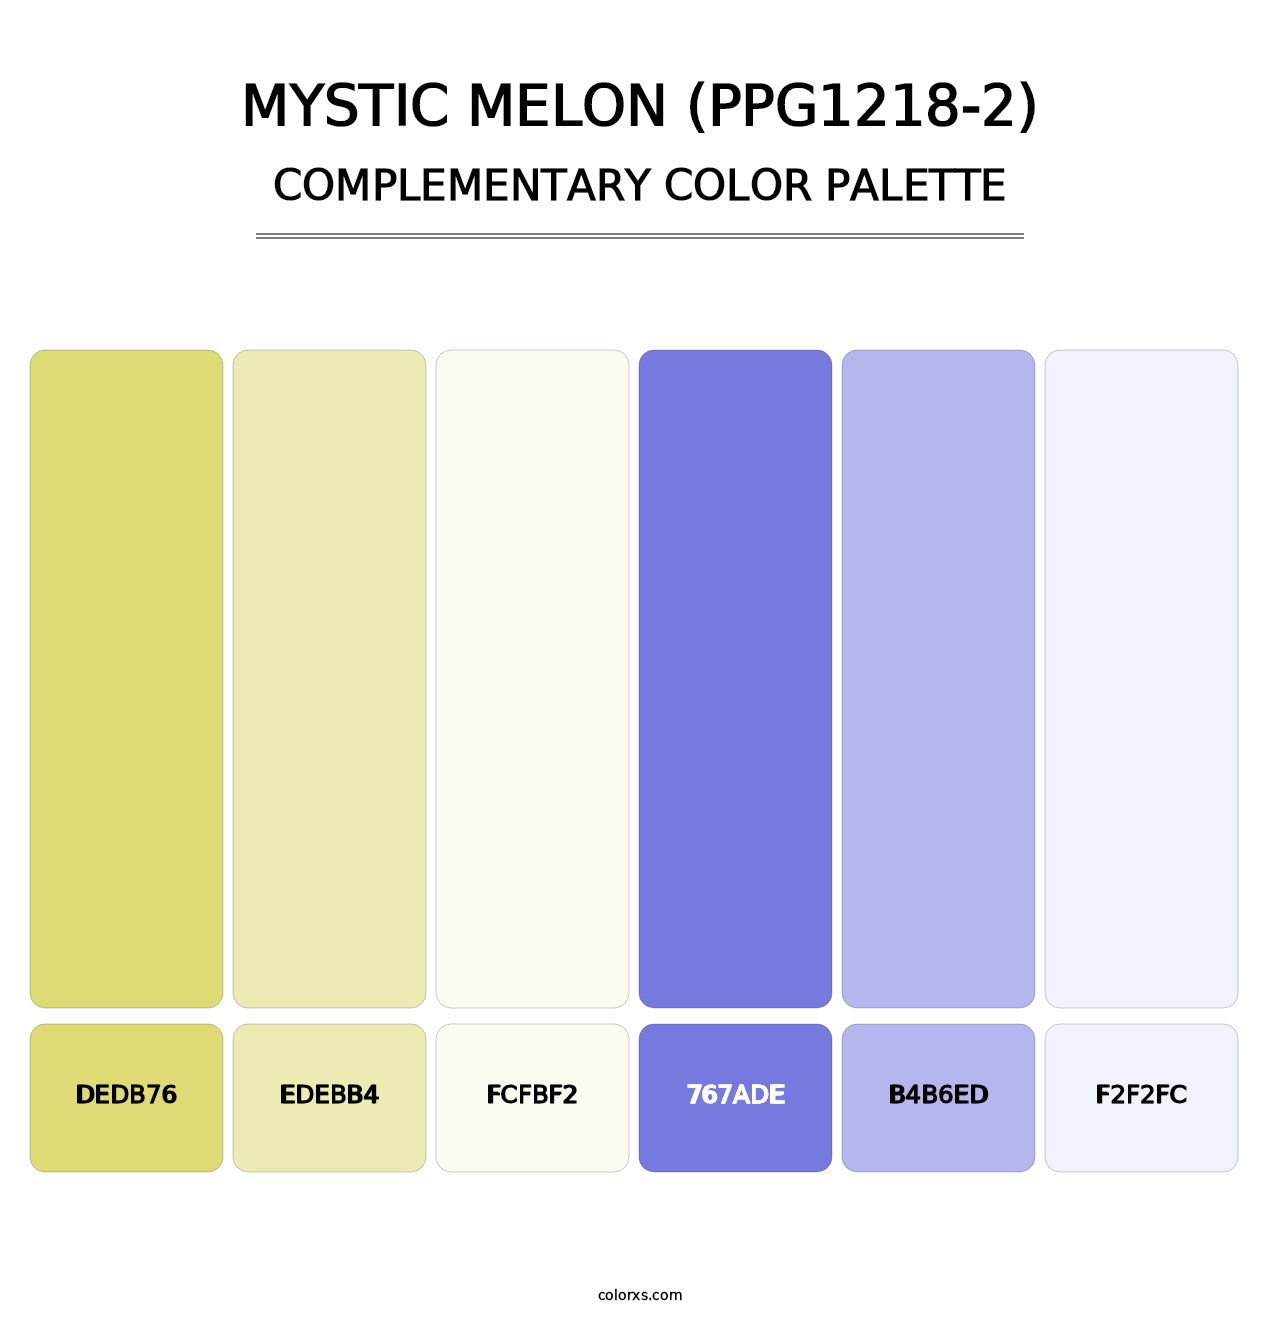 Mystic Melon (PPG1218-2) - Complementary Color Palette